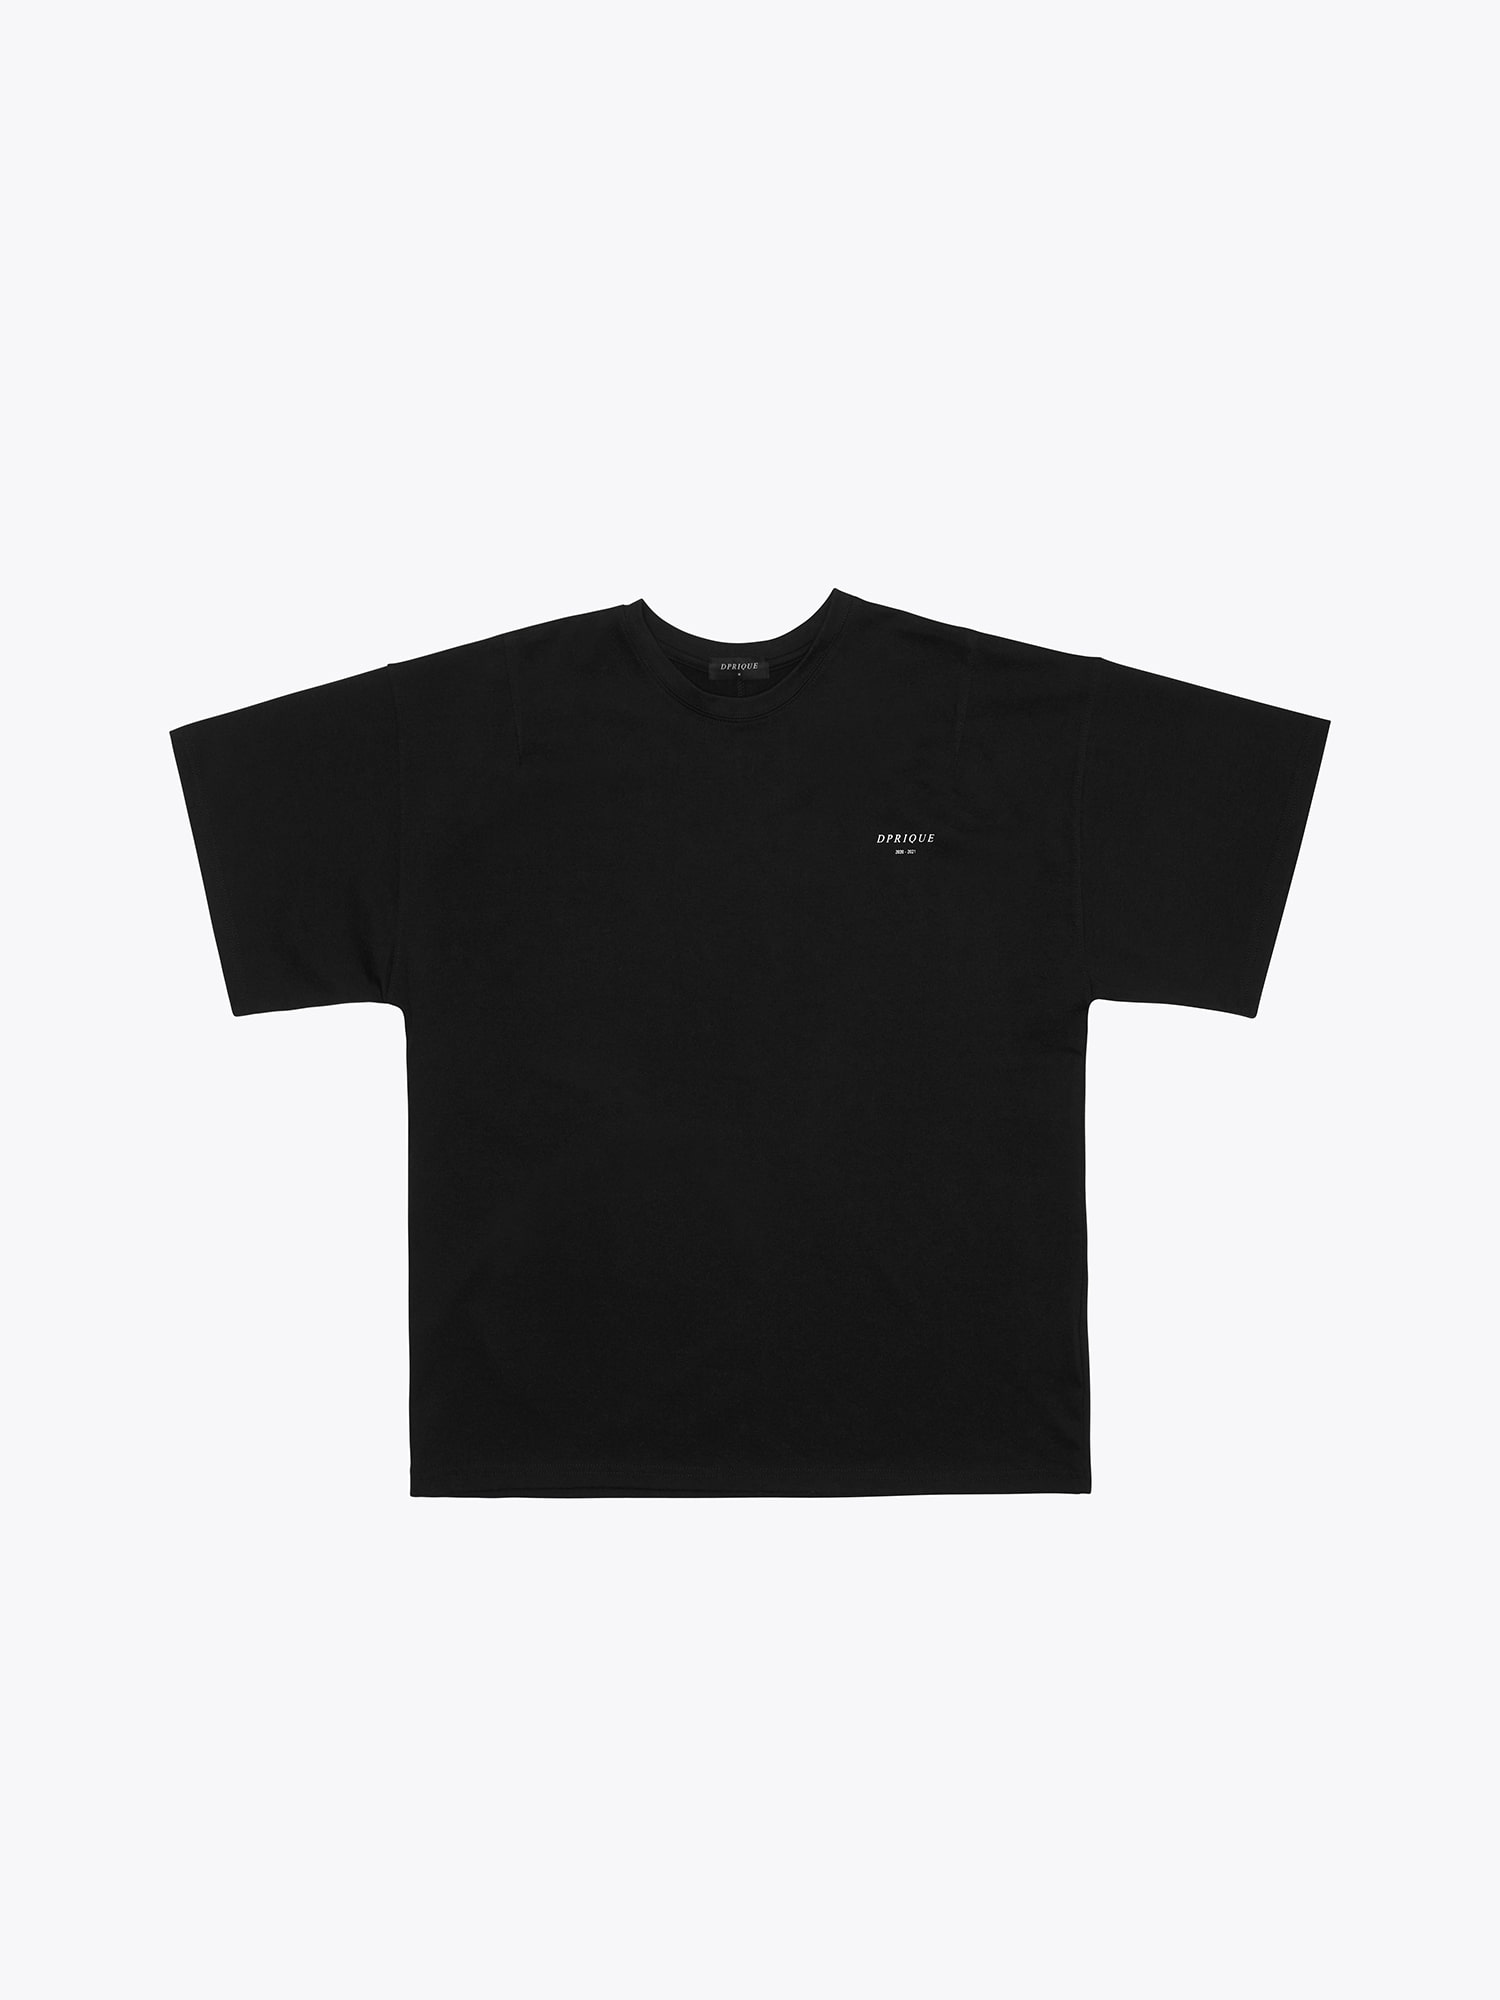 09 Oversized T-Shirt - Black